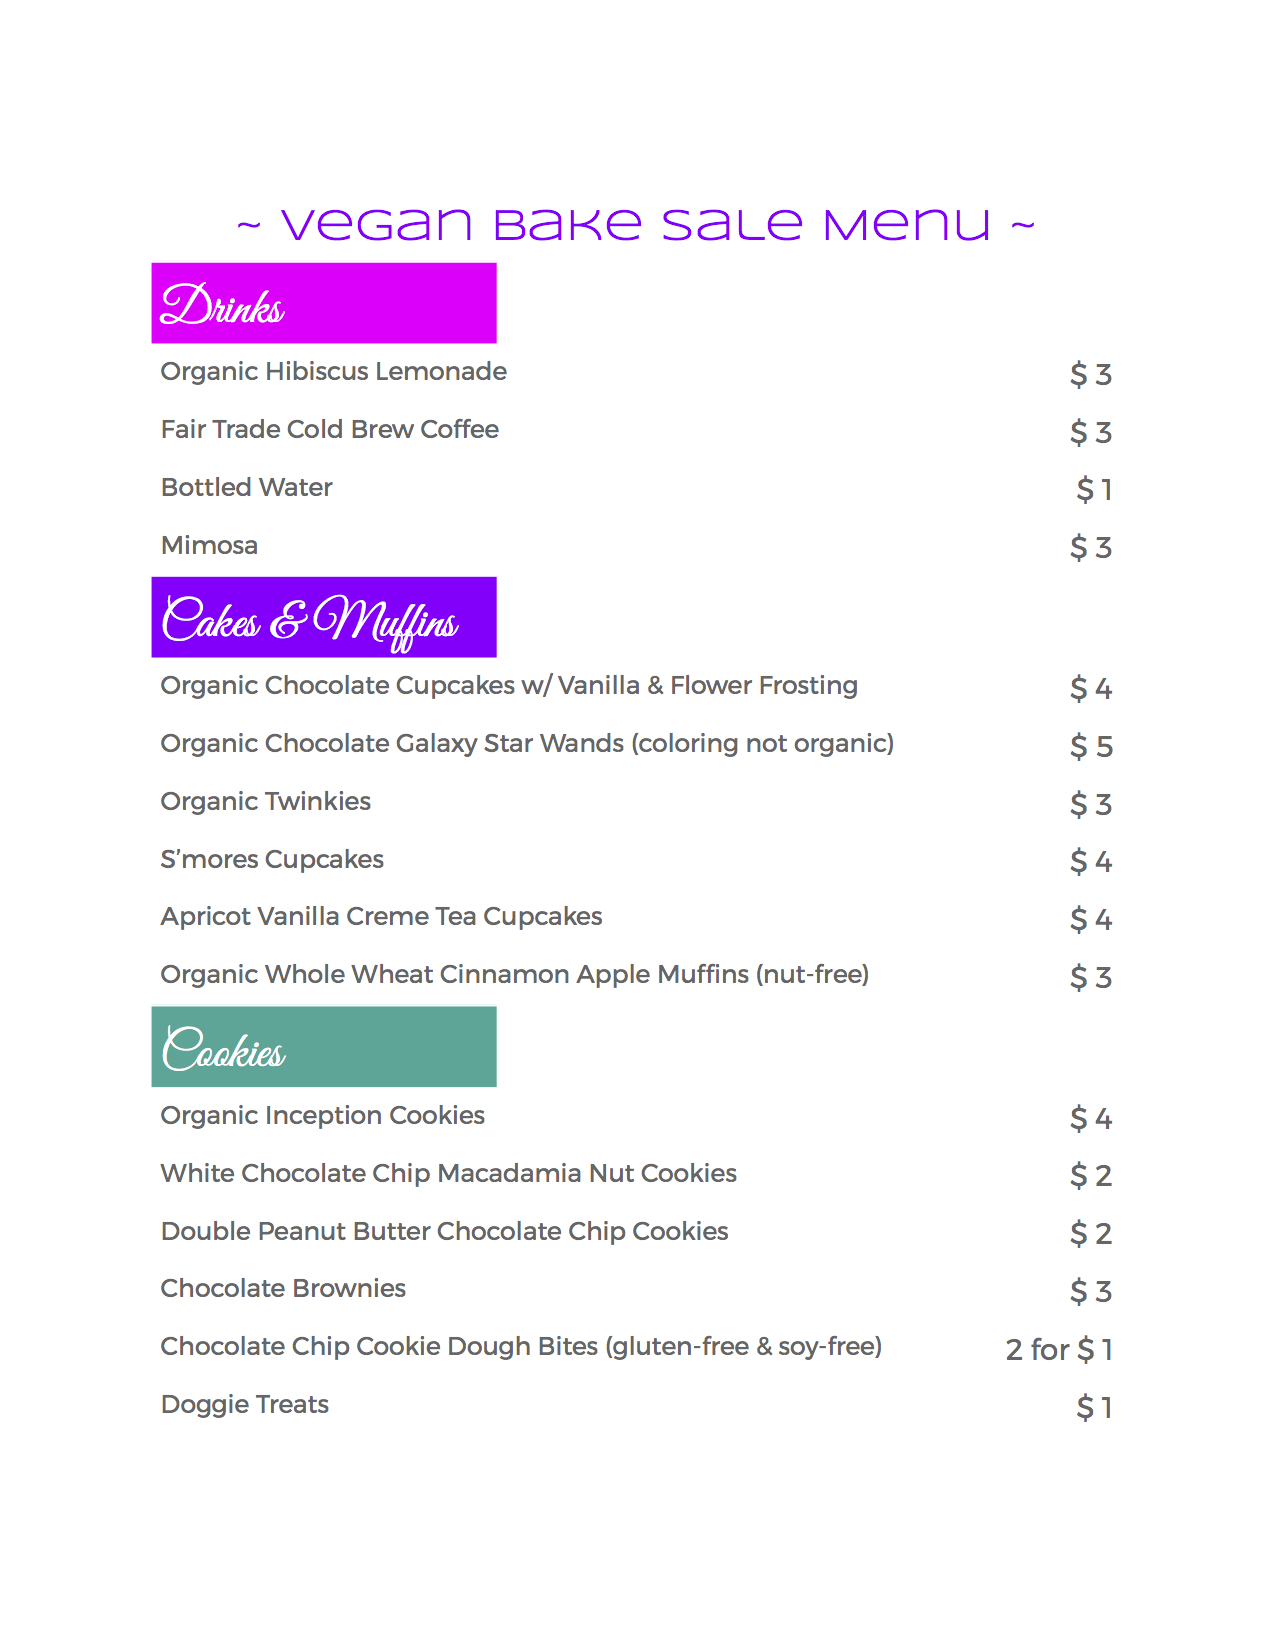 Vegan Bake Sale menu for August 13, 2017